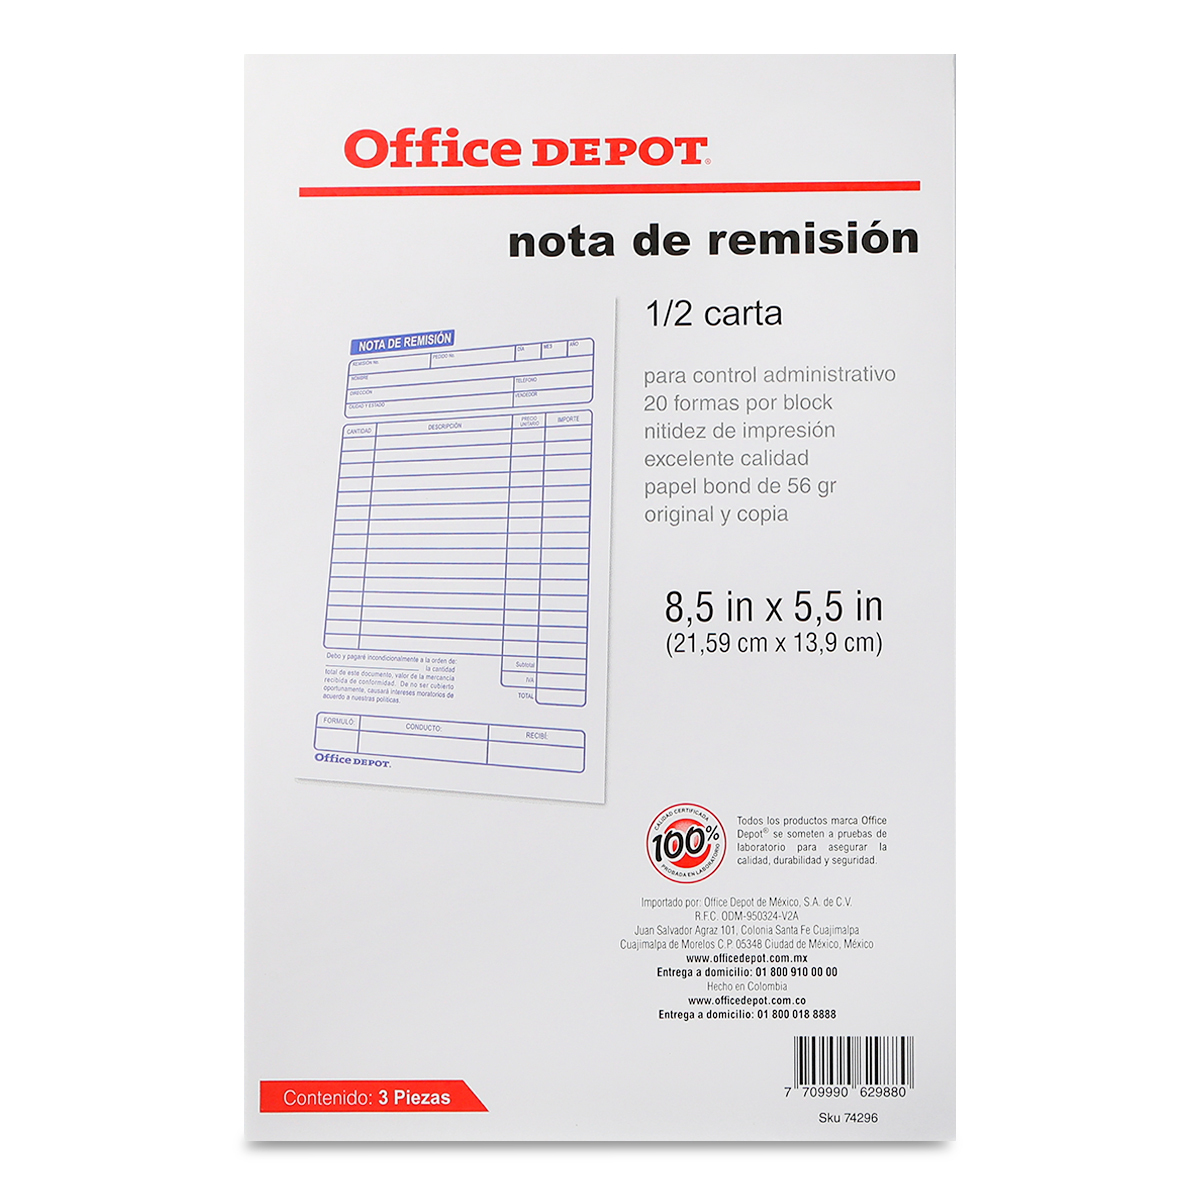 NOTA DE REMISION OFFICE DEPOT (1 2 CARTA, 3 PZS.) | Office Depot Mexico